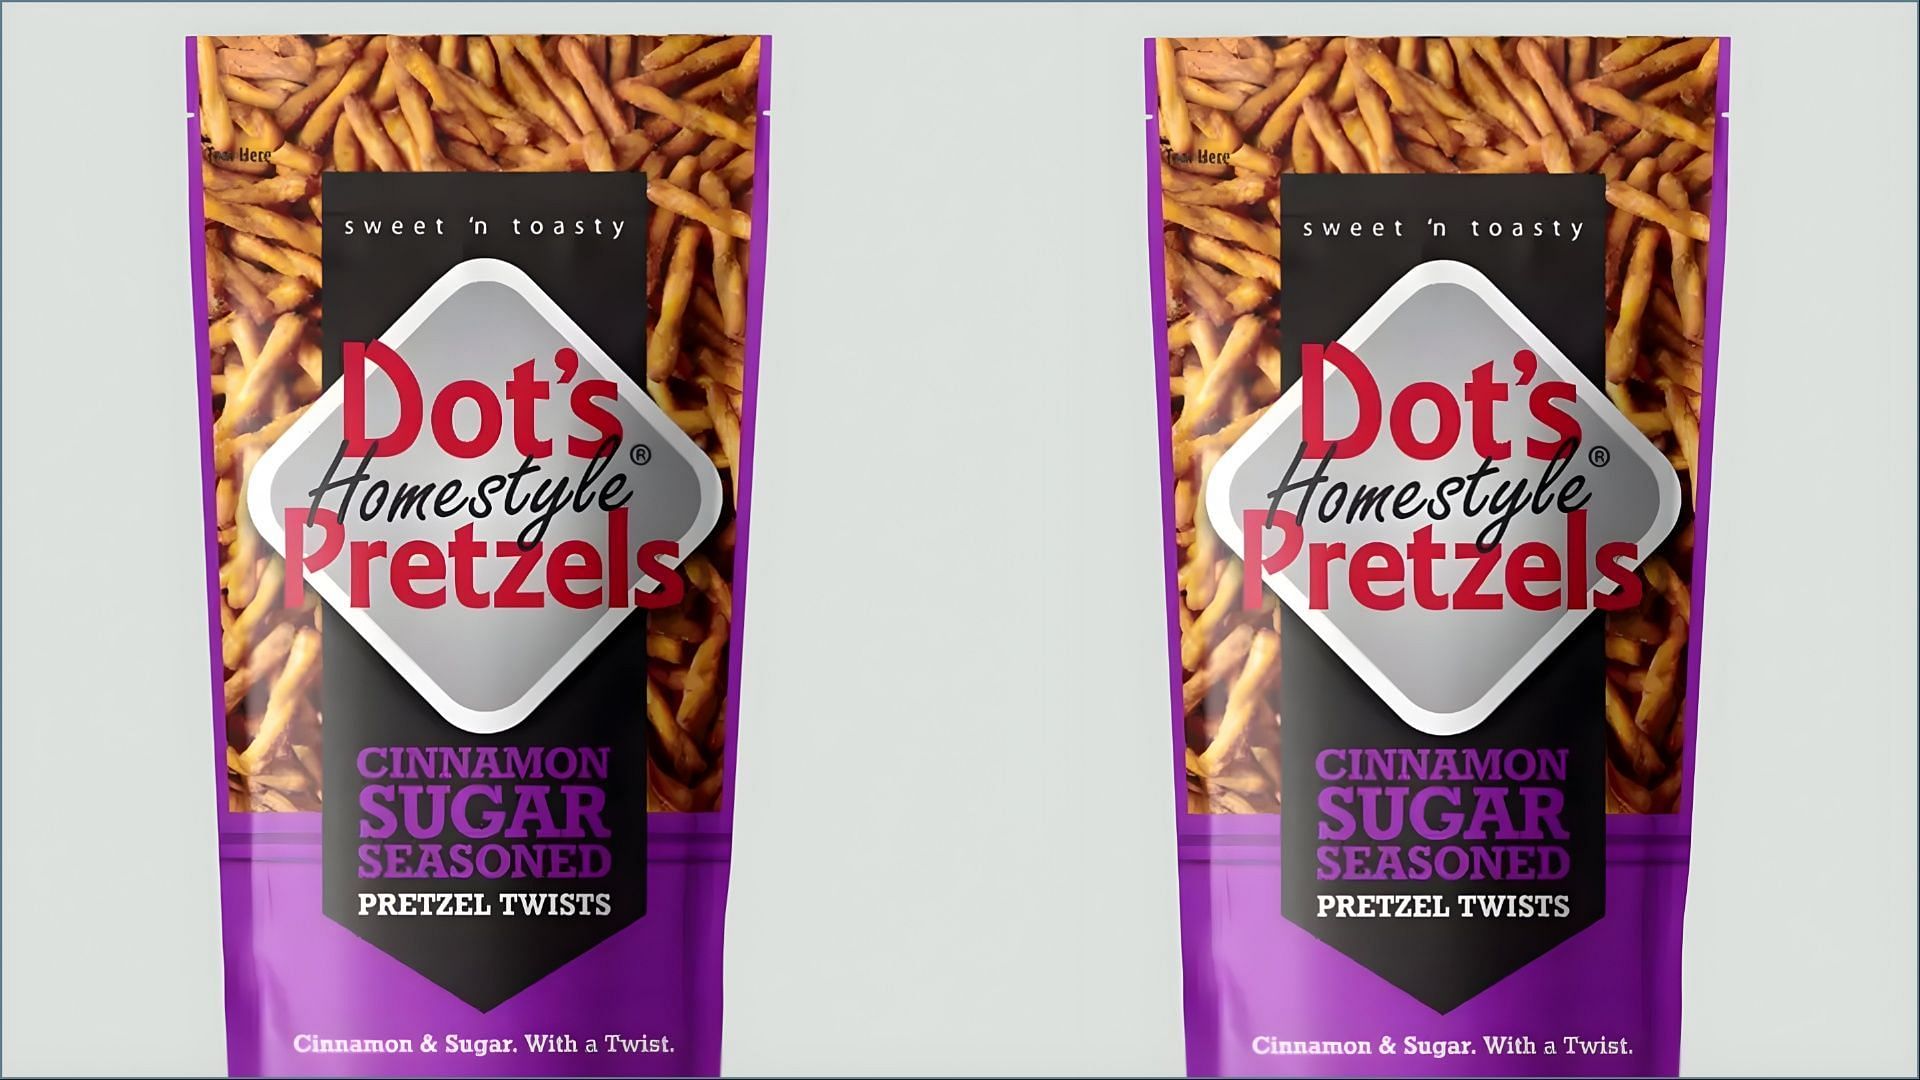 Costco adds Dots Cinnamon Sugar Pretzels to store shelves nationwide (Image via HersheyLand) 